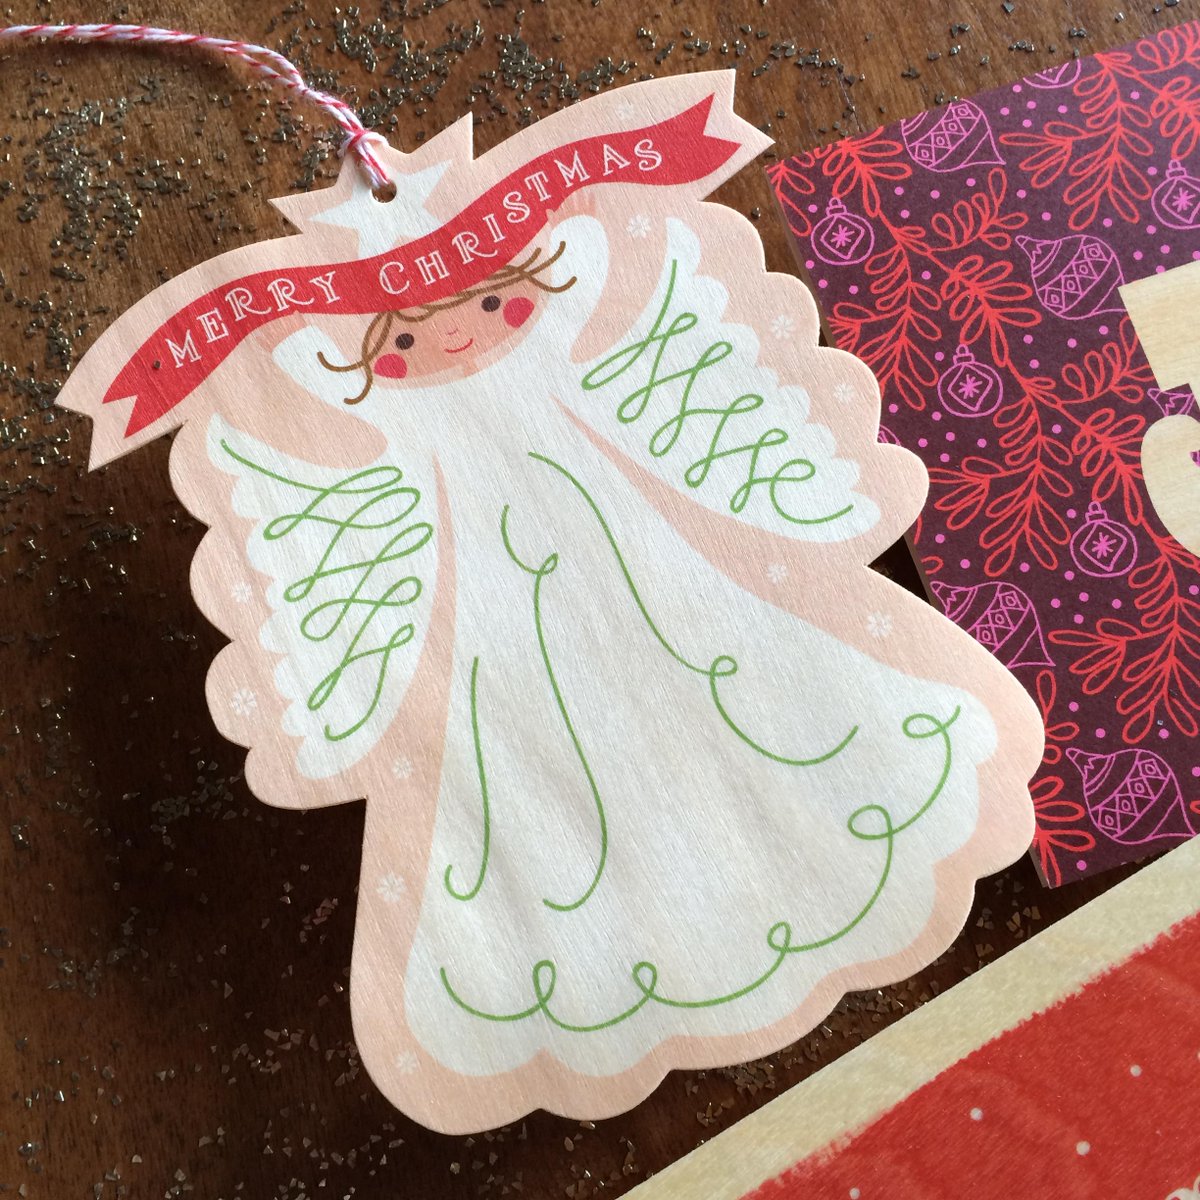 Be an angel...send an angel this holiday season! #realwood #ornamentcard